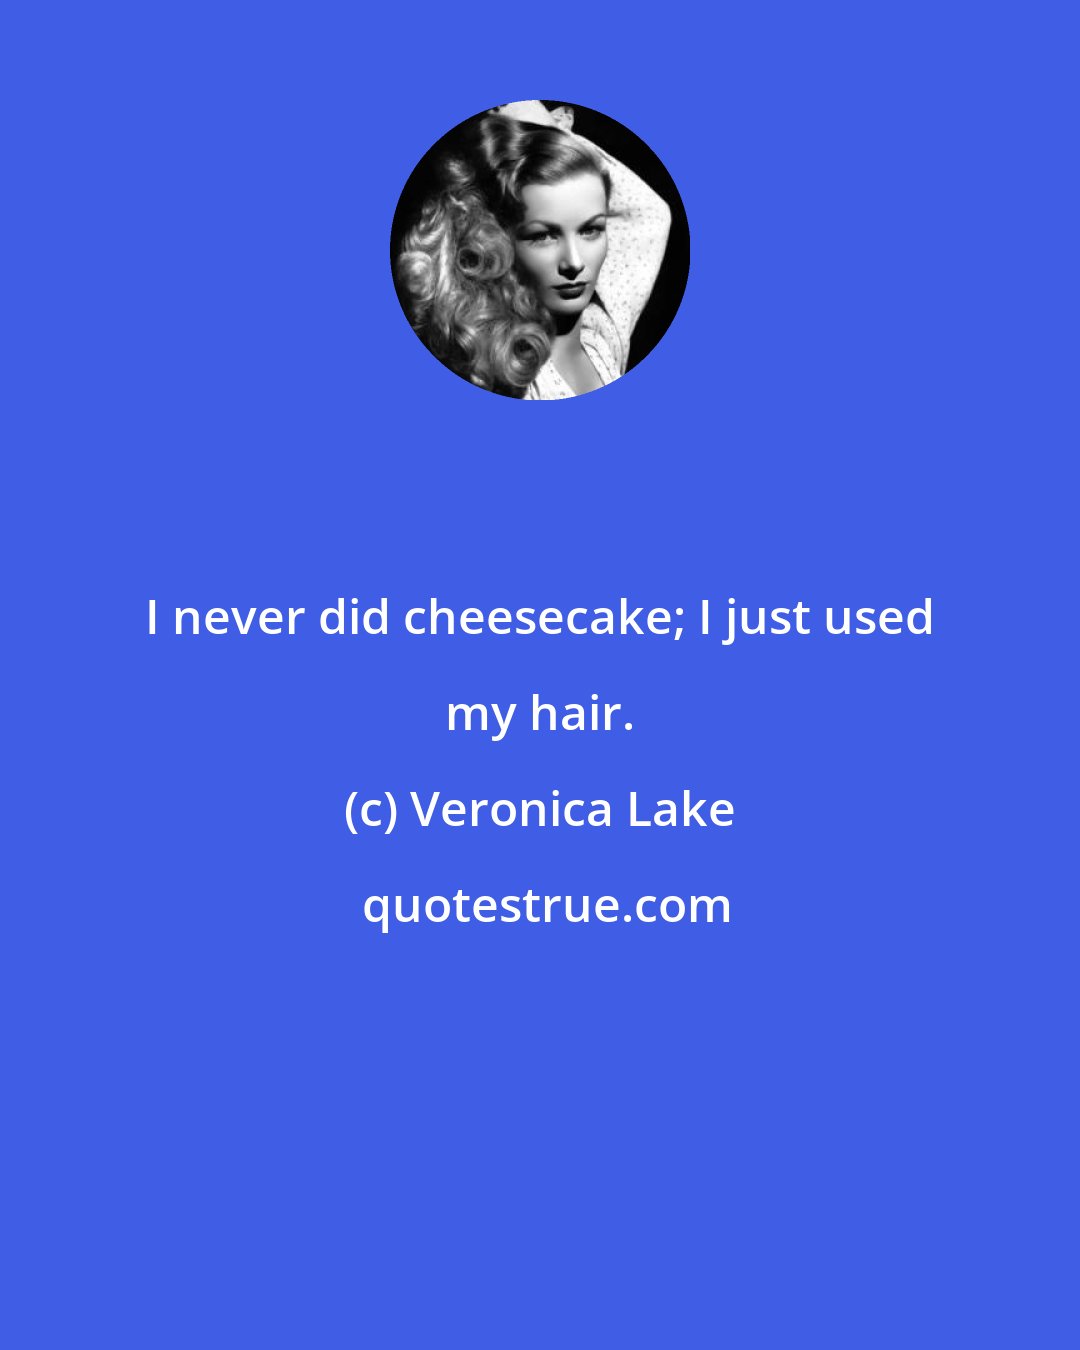 Veronica Lake: I never did cheesecake; I just used my hair.